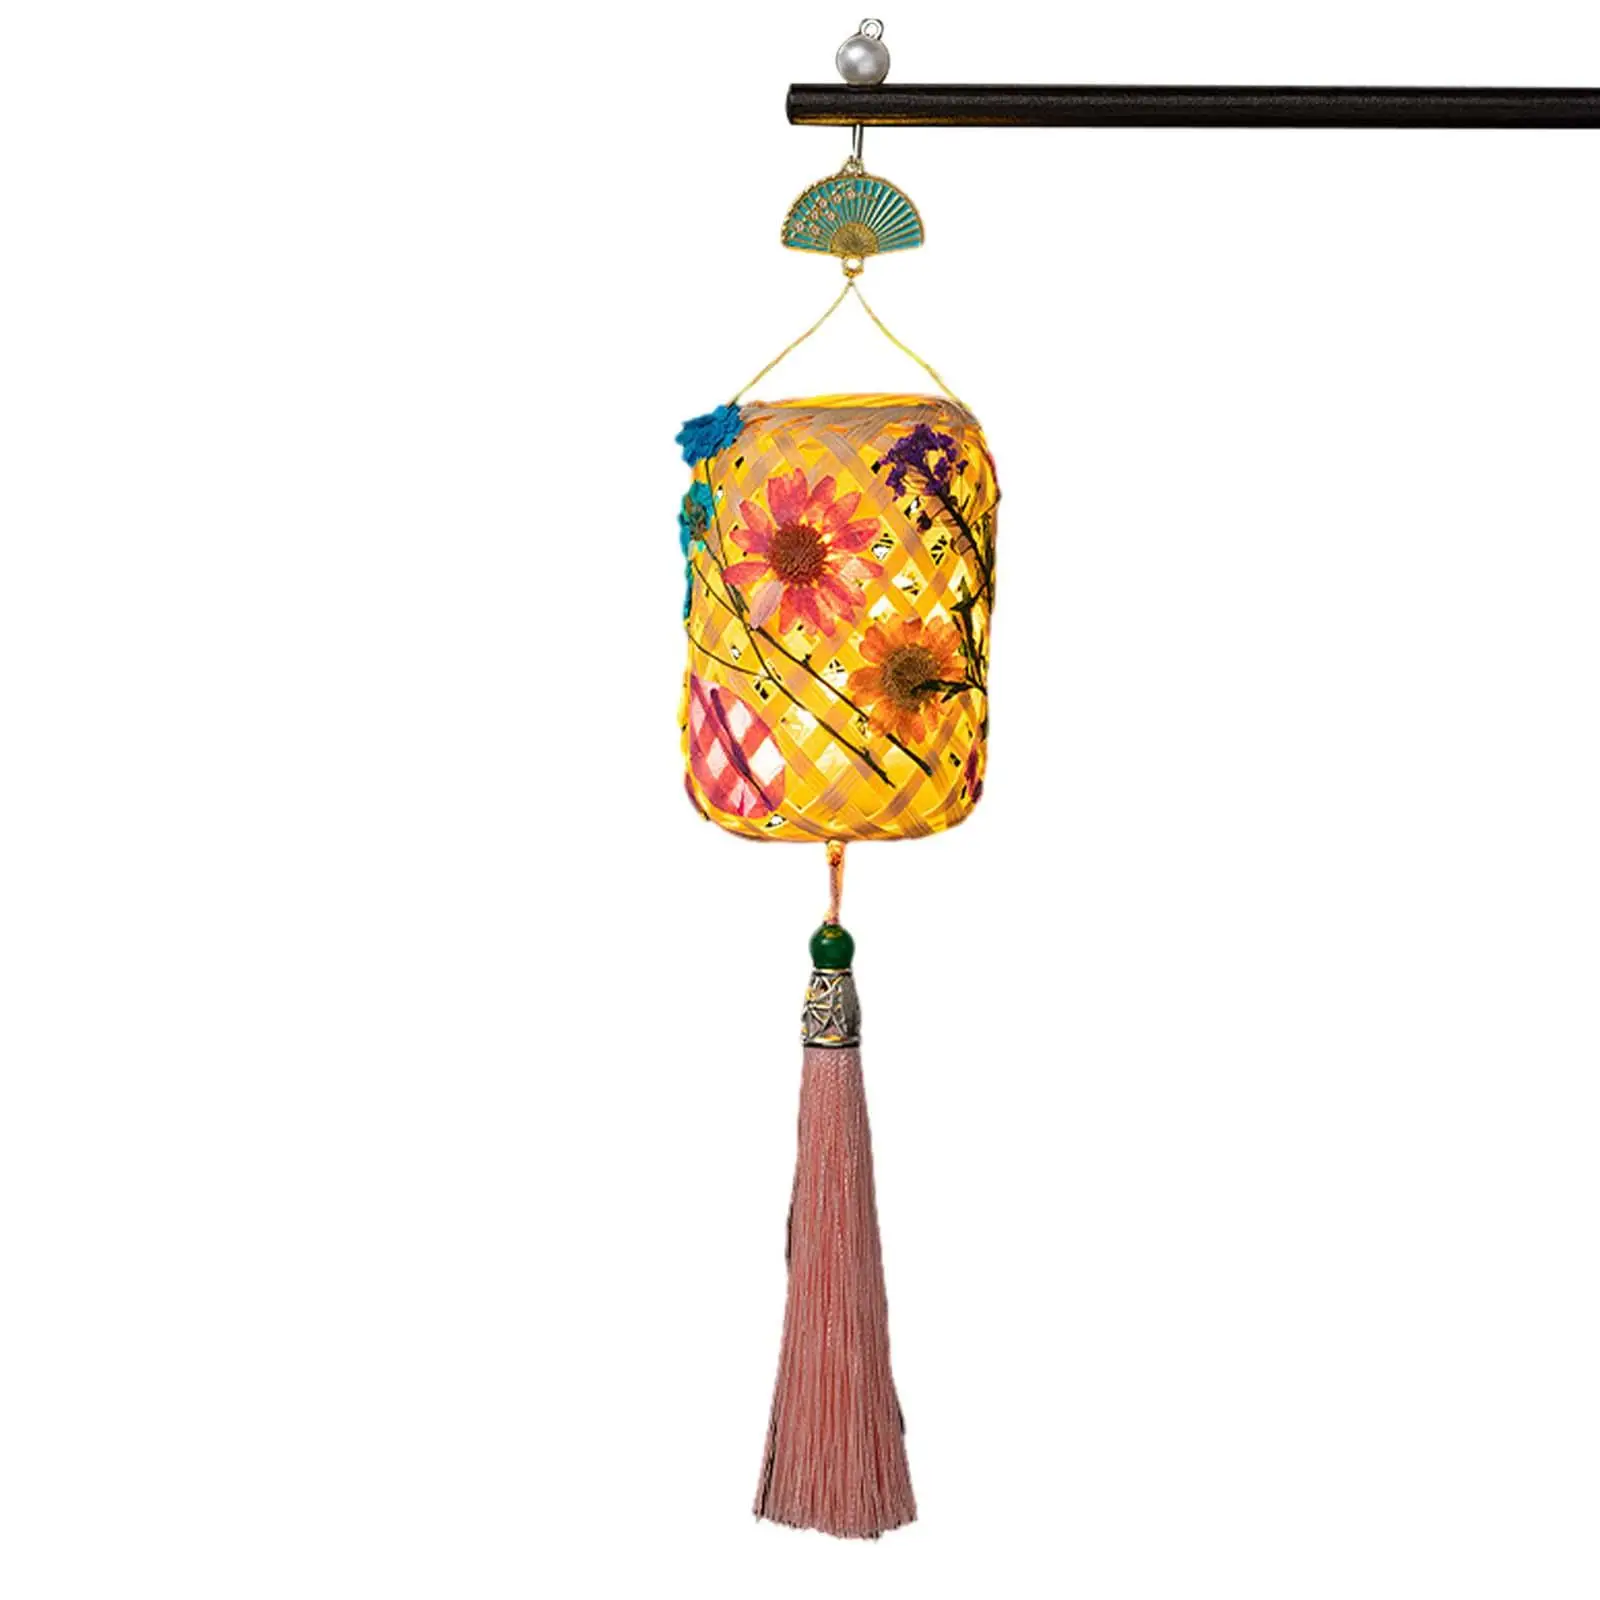 DIY Crafts Kits Decorative Tassels Mid Autumn Festival Lantern Making for Spring Festival Indoor Outdoor Wedding Holiday Kids